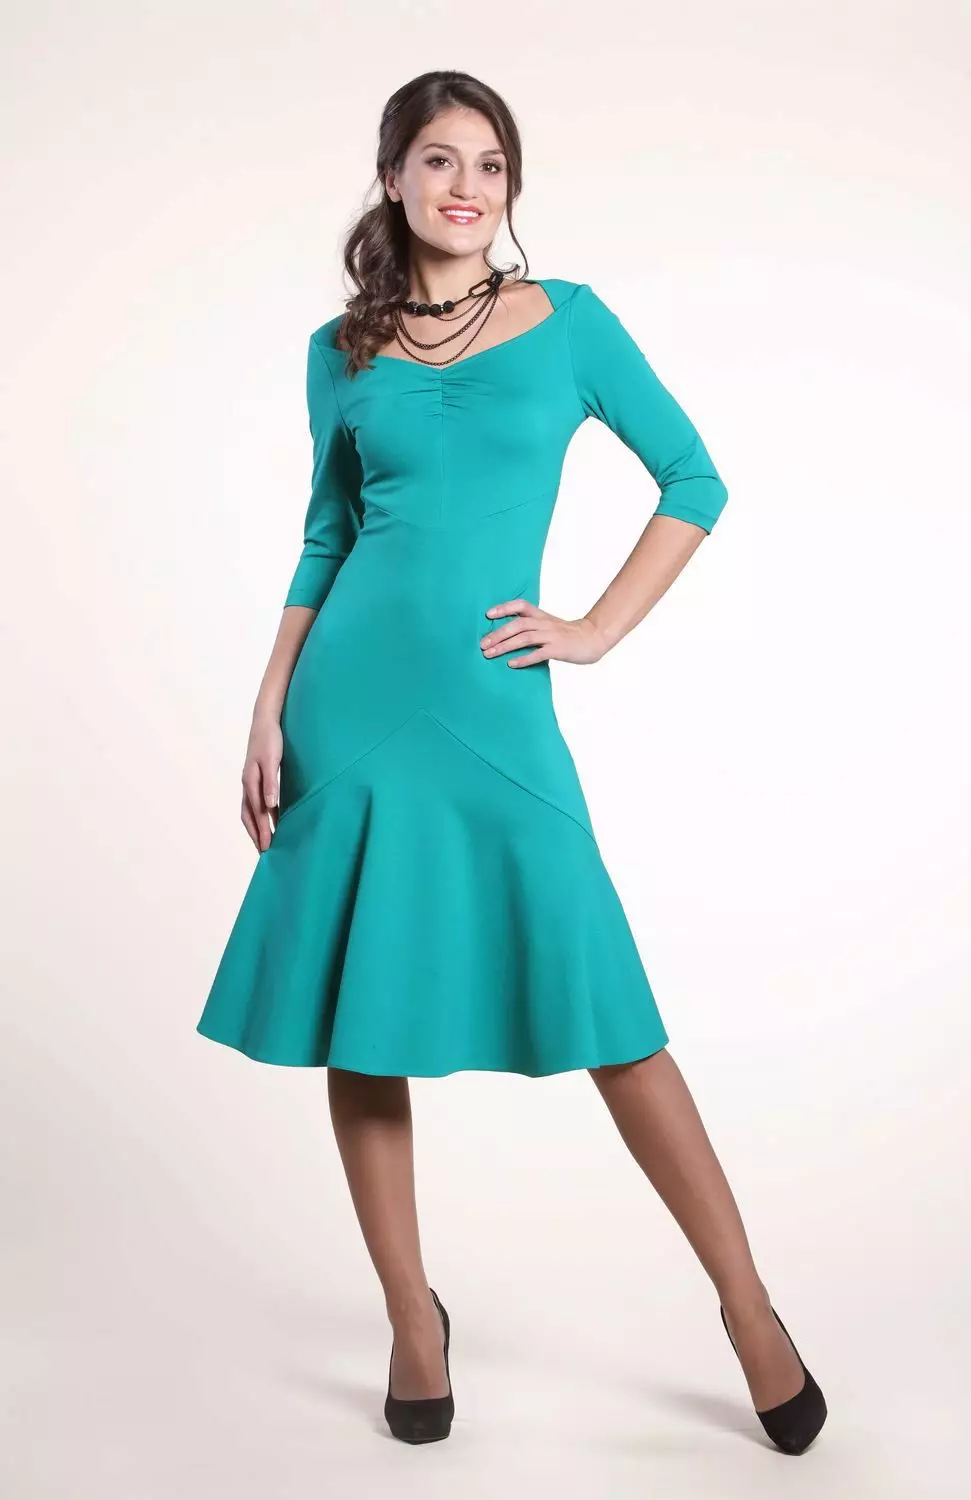 Turquoise Woolen Dress.